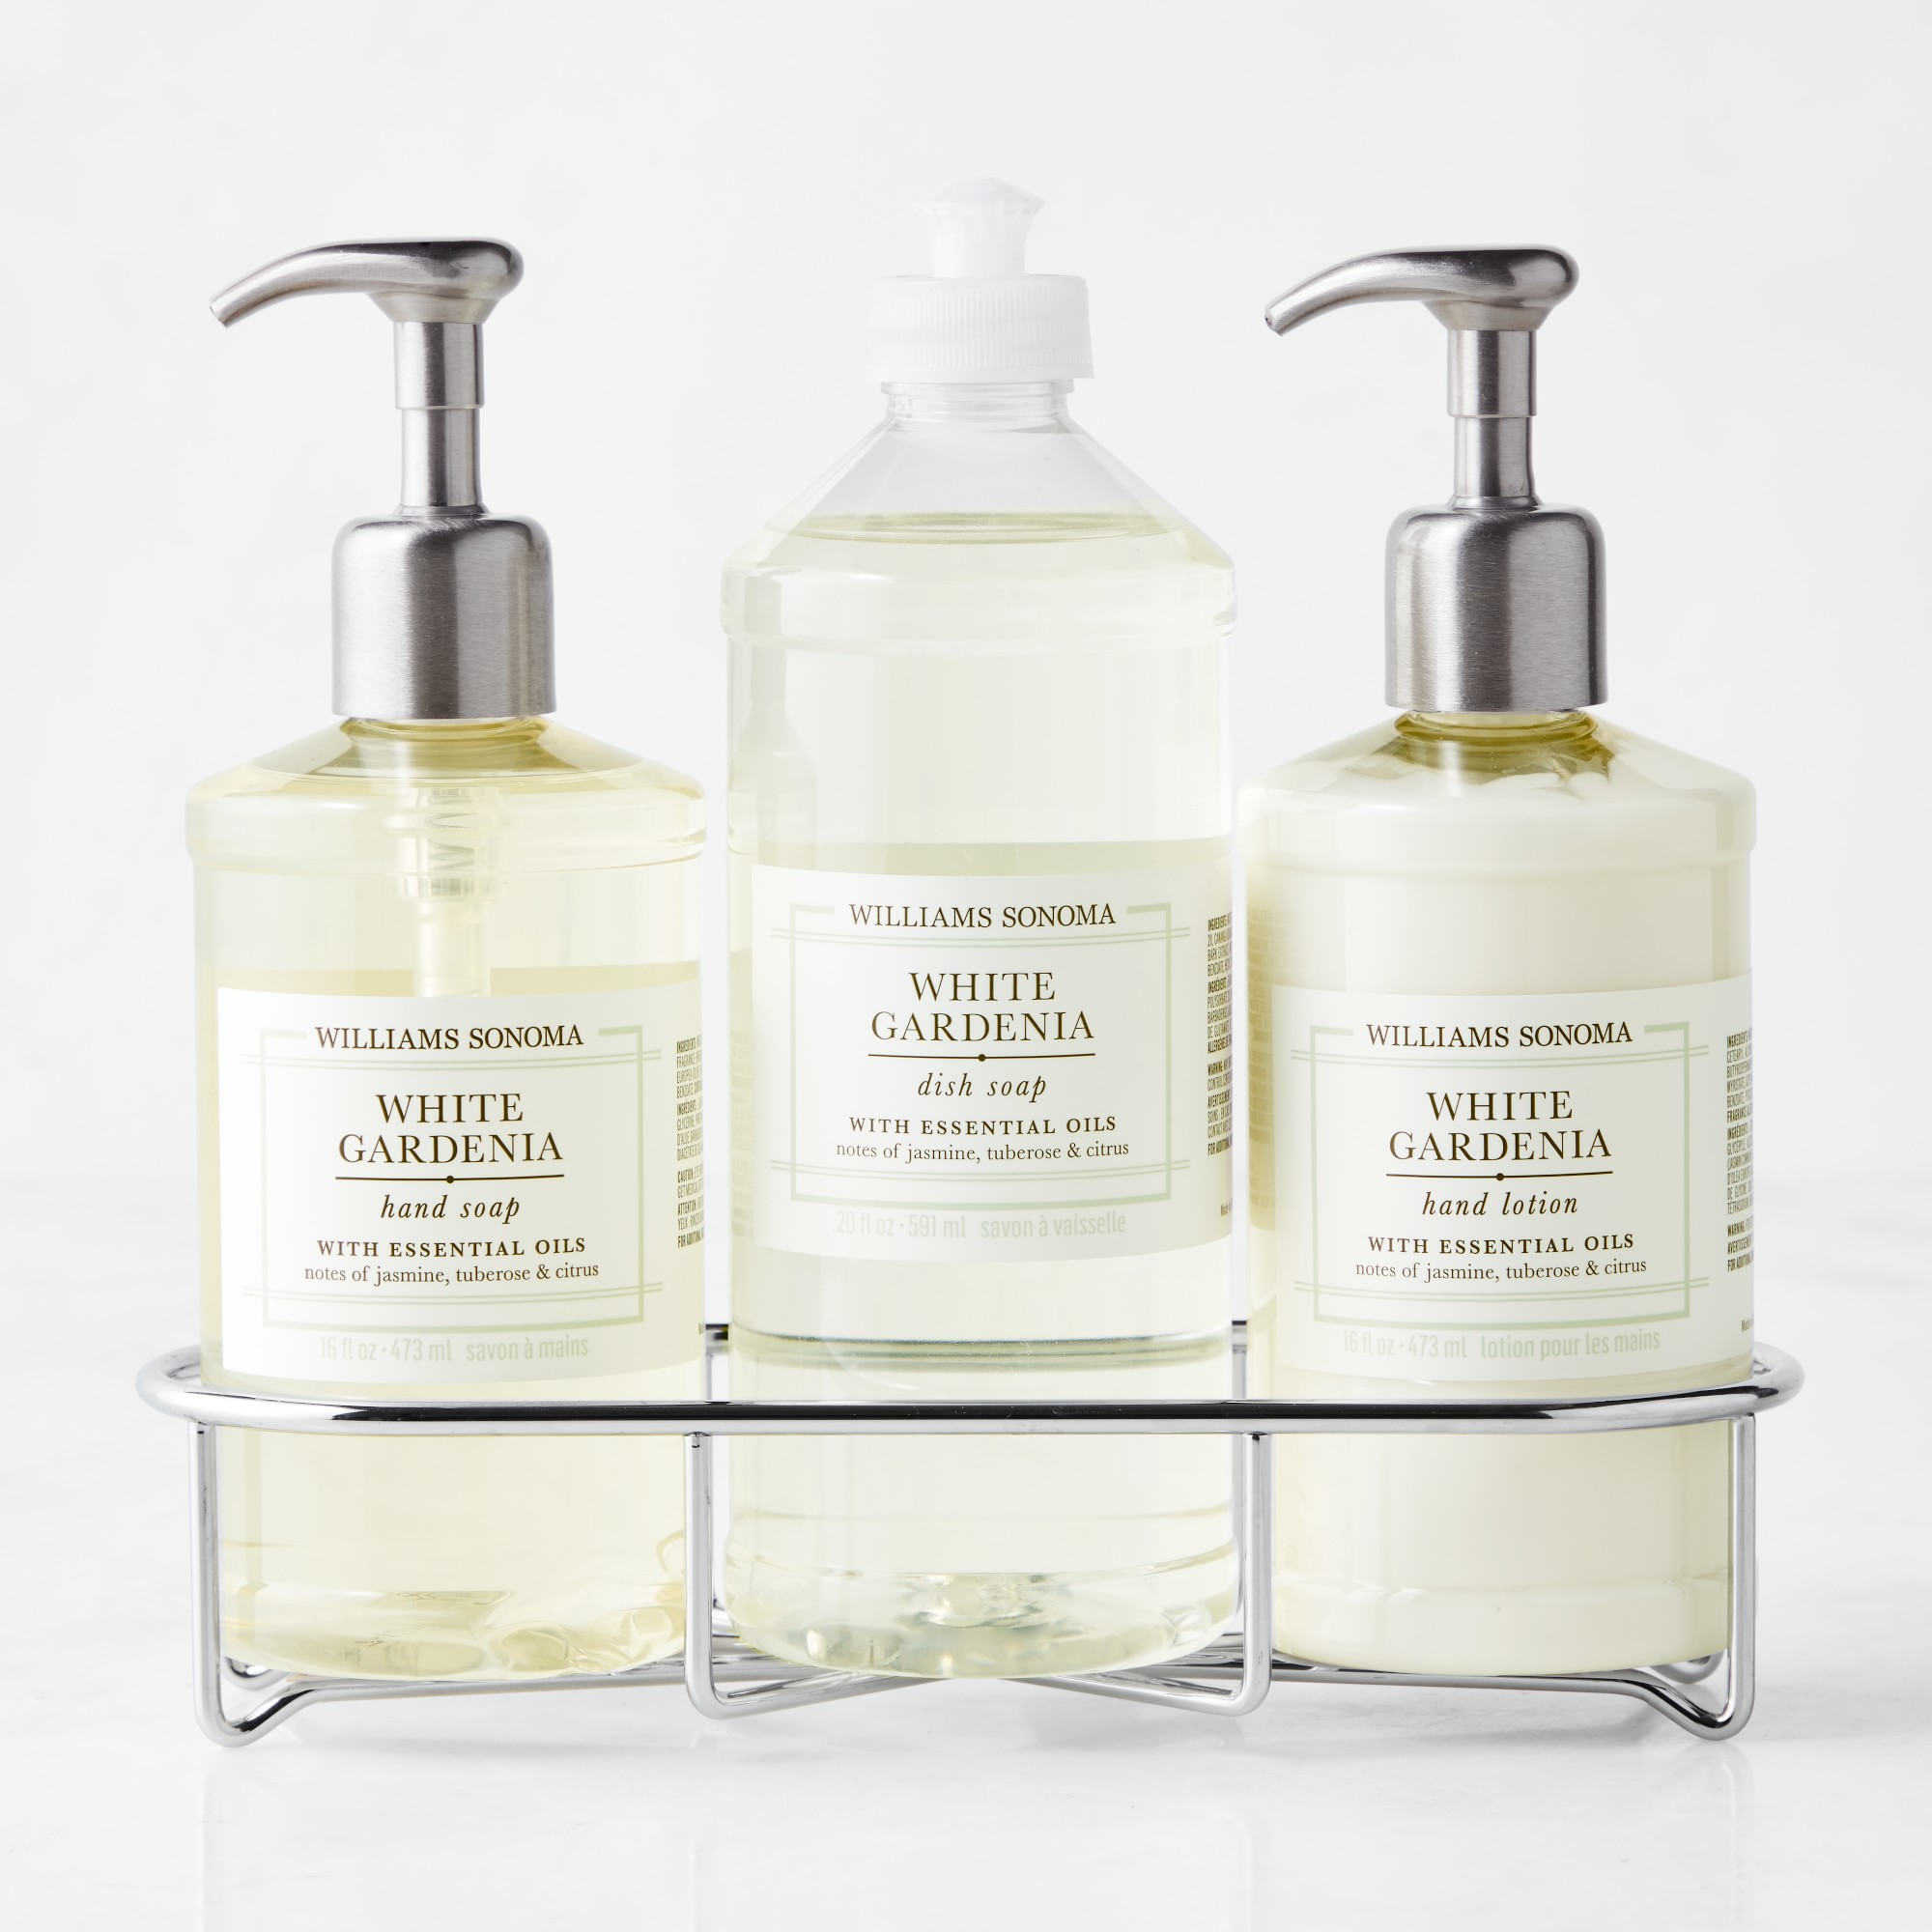 Williams Sonoma White Gardenia Hand Soap, Dish Soap & Lotion 4-Piece Kitchen Set